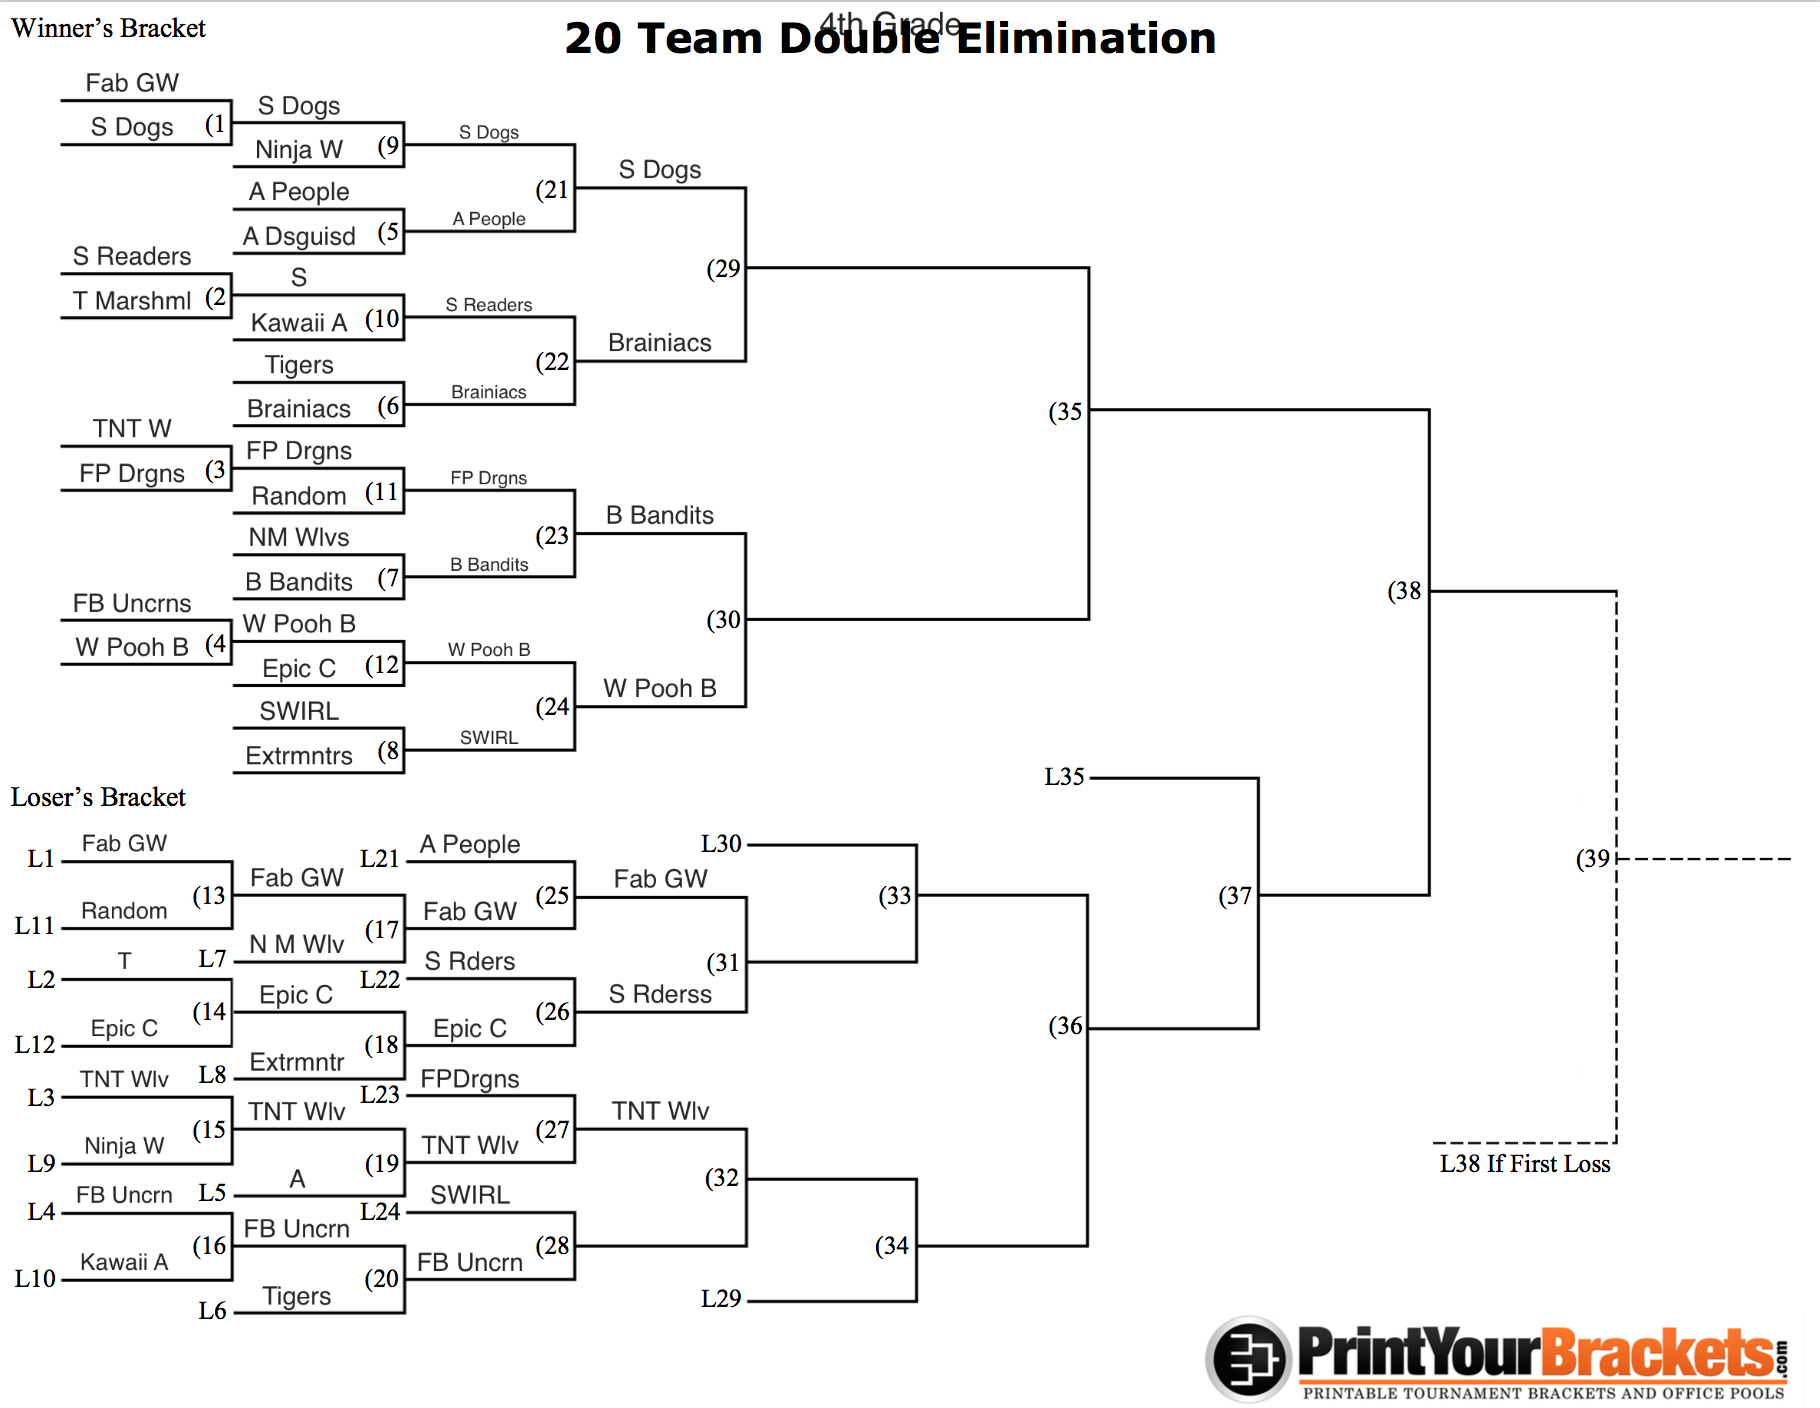 20 Team Bracket - 20 Team Single Elimination Printable Tournament Bracket.